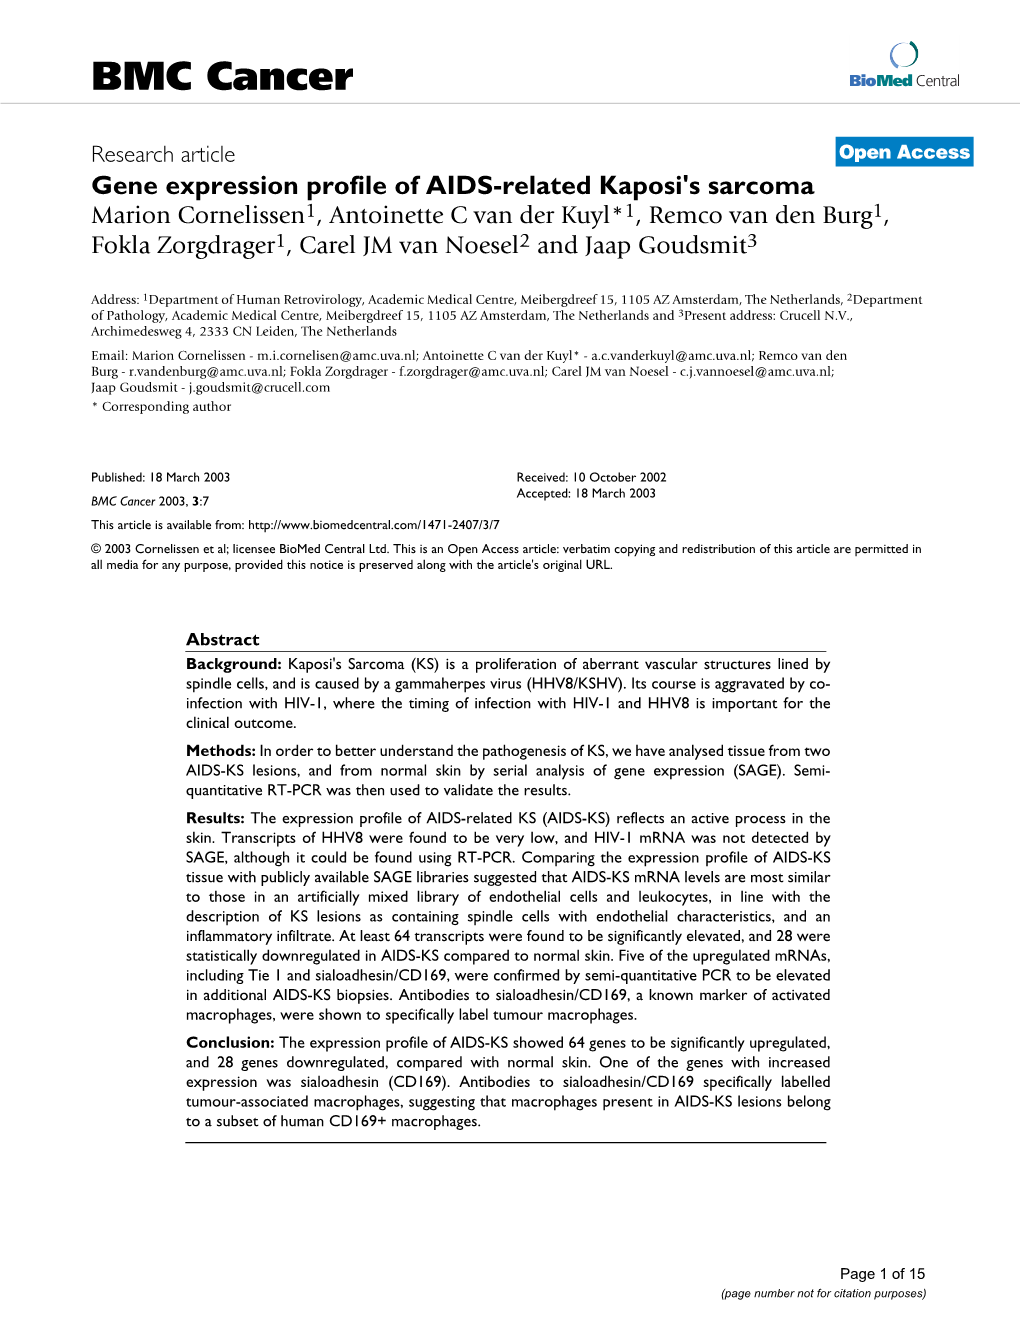 Gene Expression Profile of AIDS-Related Kaposi's Sarcoma